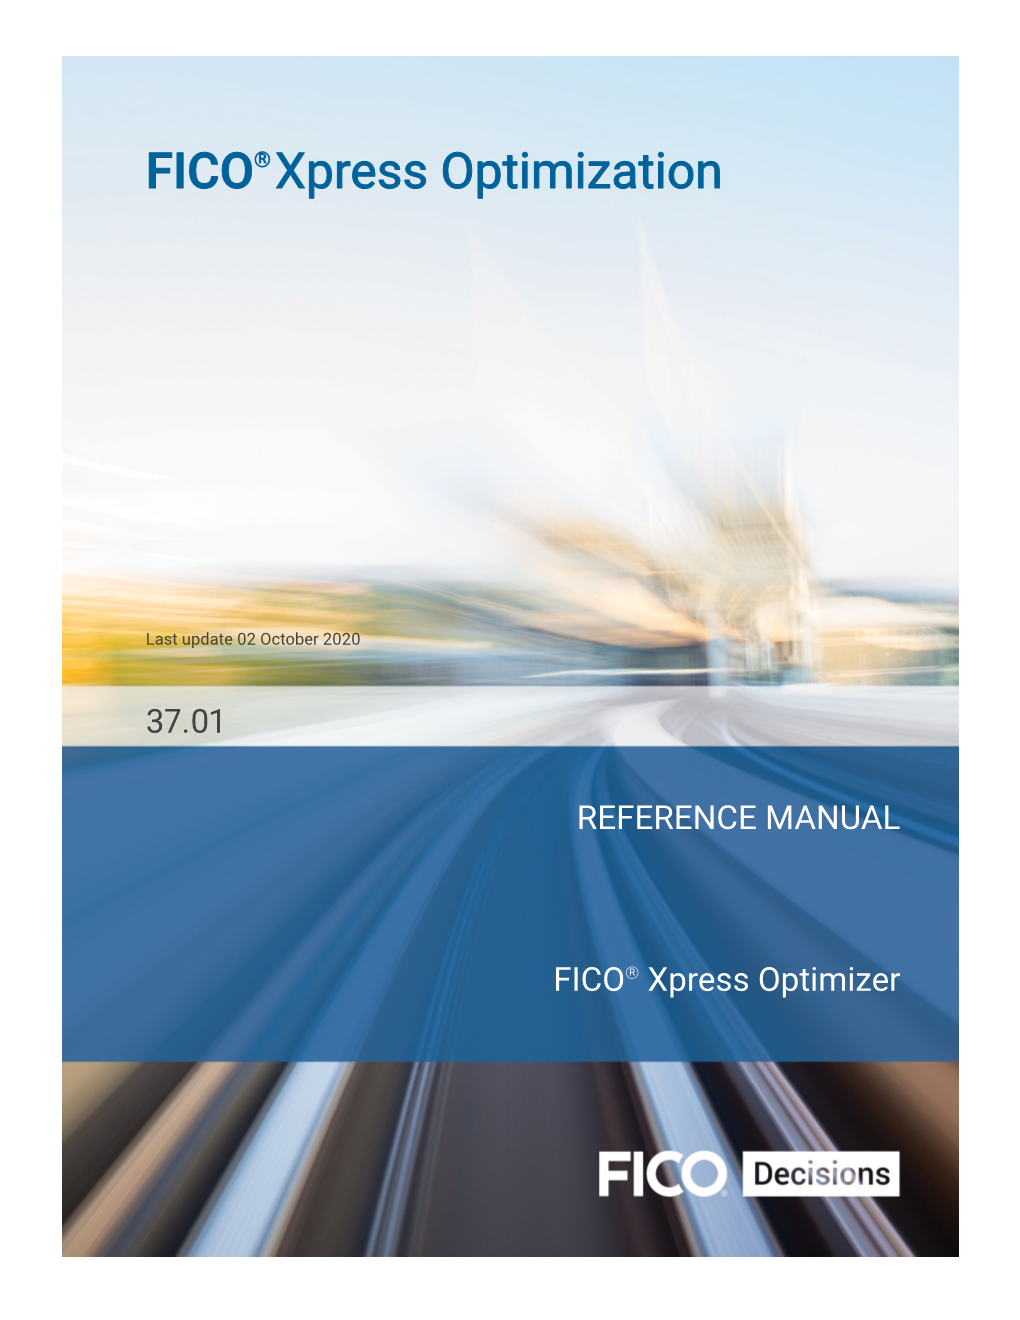 FICO Xpress Optimizer Reference Manual